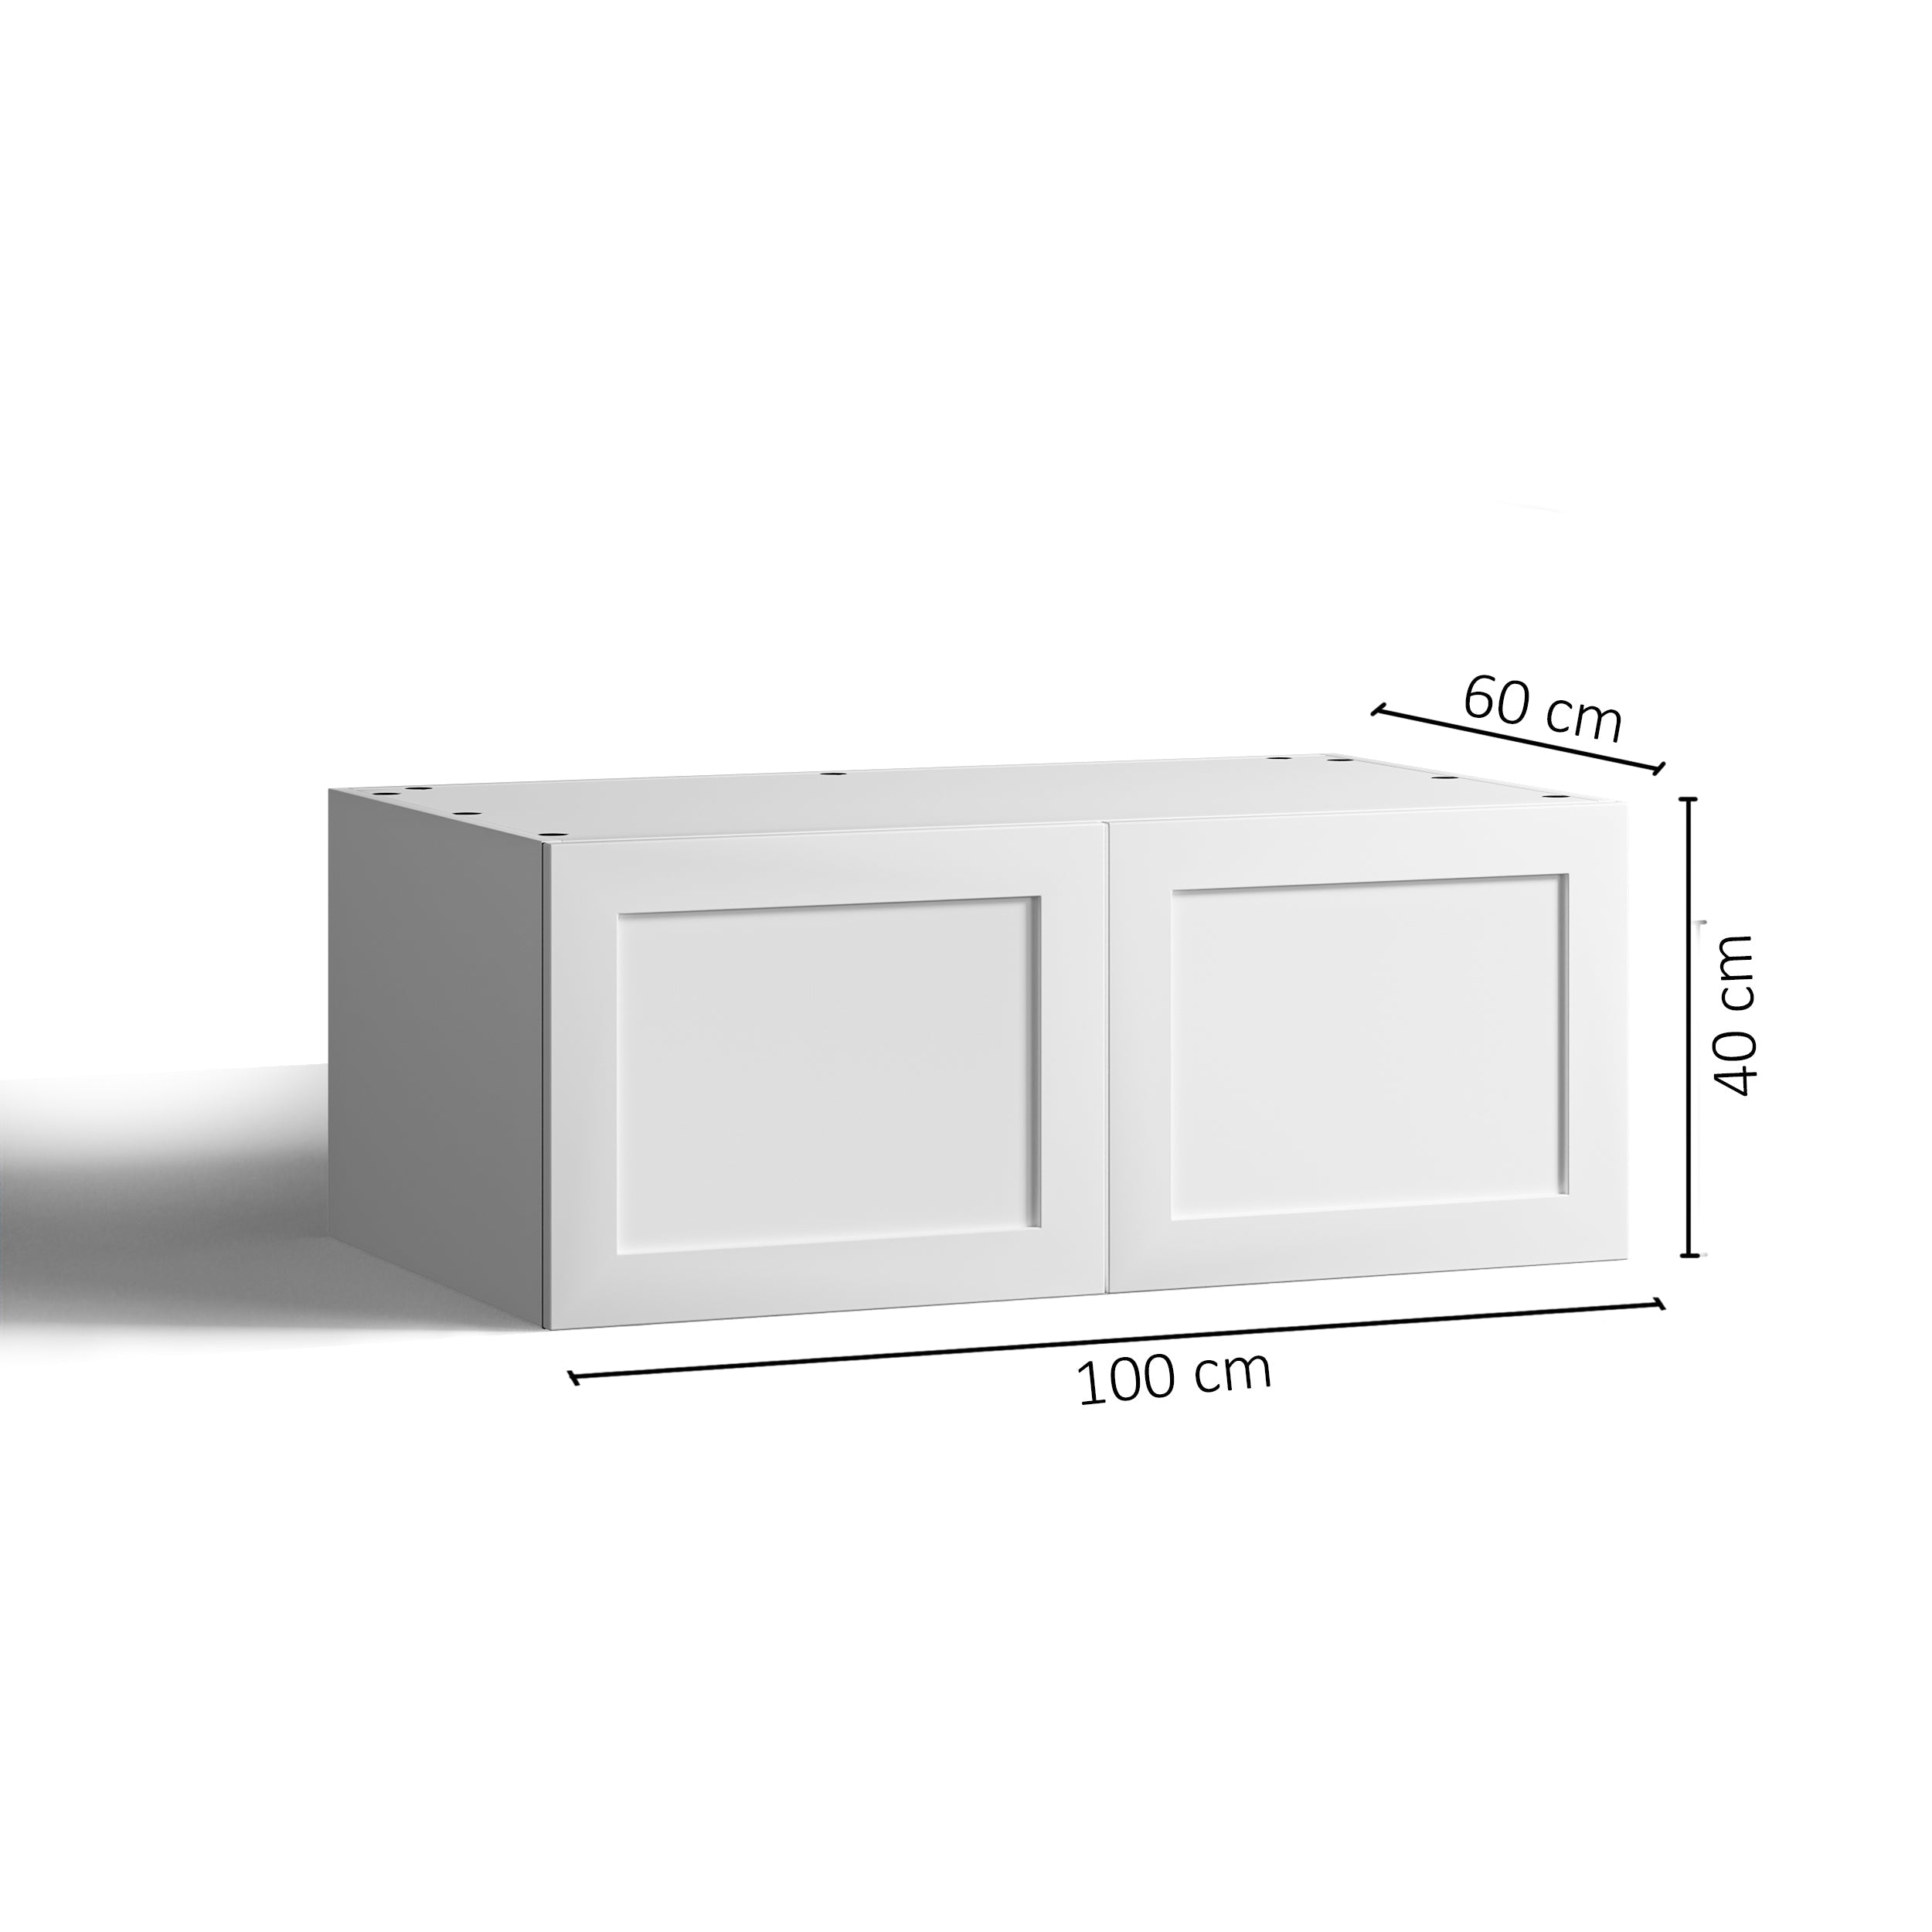 100x40 - Cabinet (58cm D) w 2 Doors - Shaker - RAW - PAX